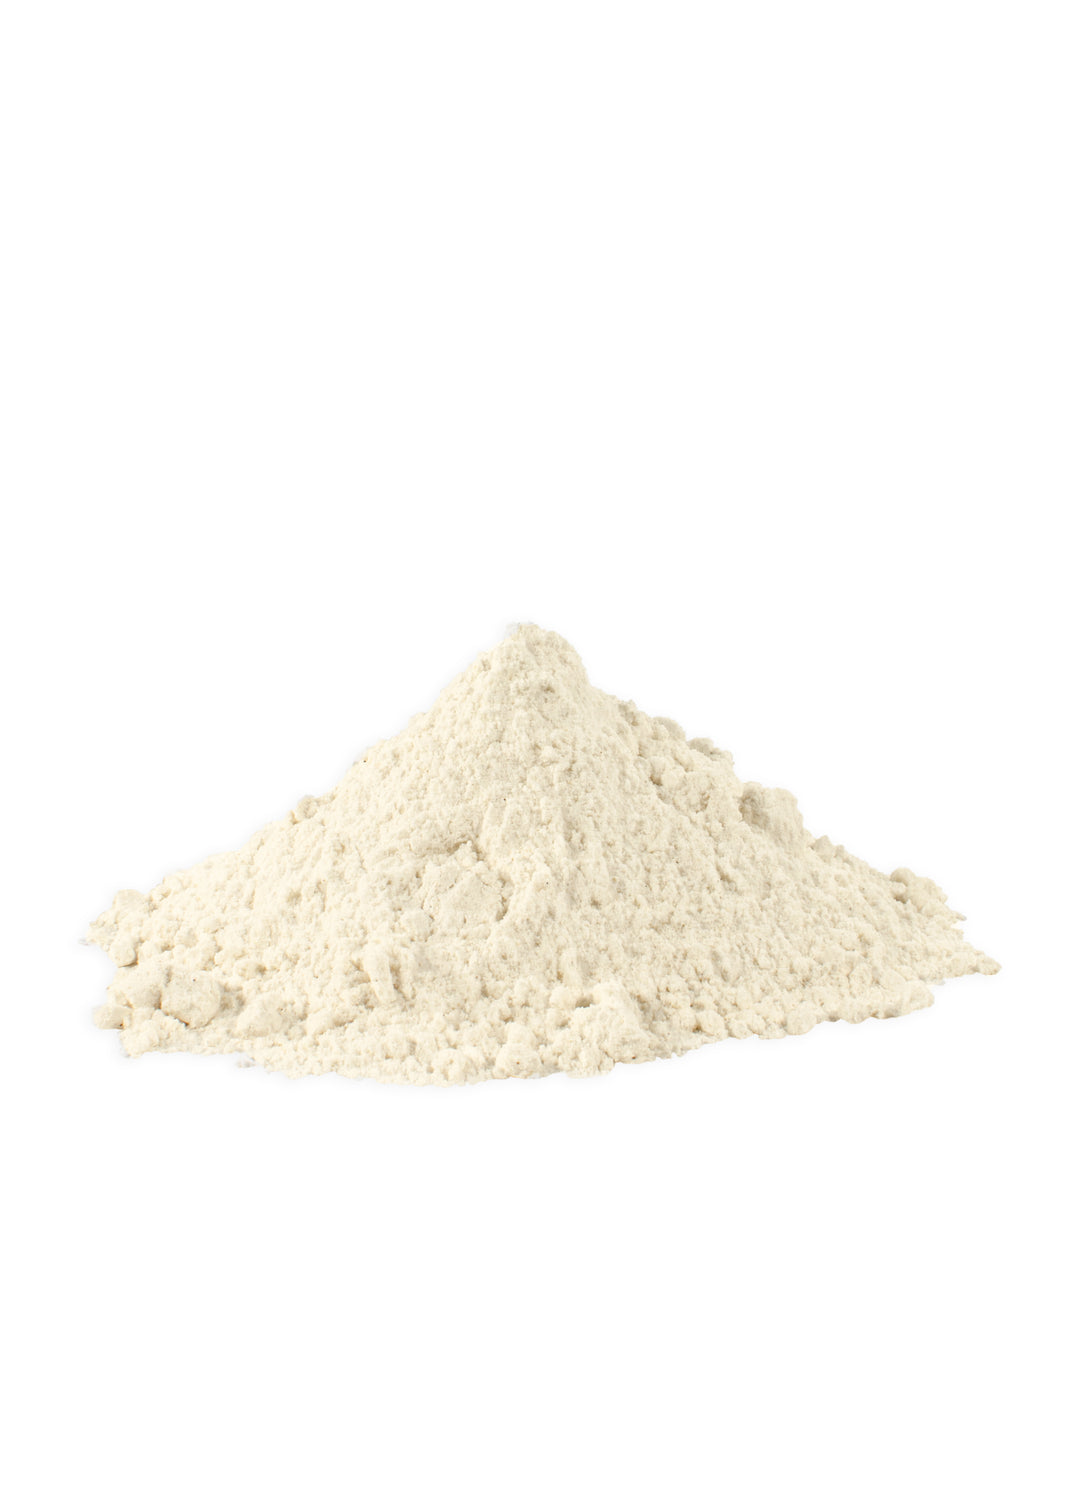 Bob's Red Mill Natural Foods Inc Grain Free Paleo Baking Flour-16 oz.-4/Case